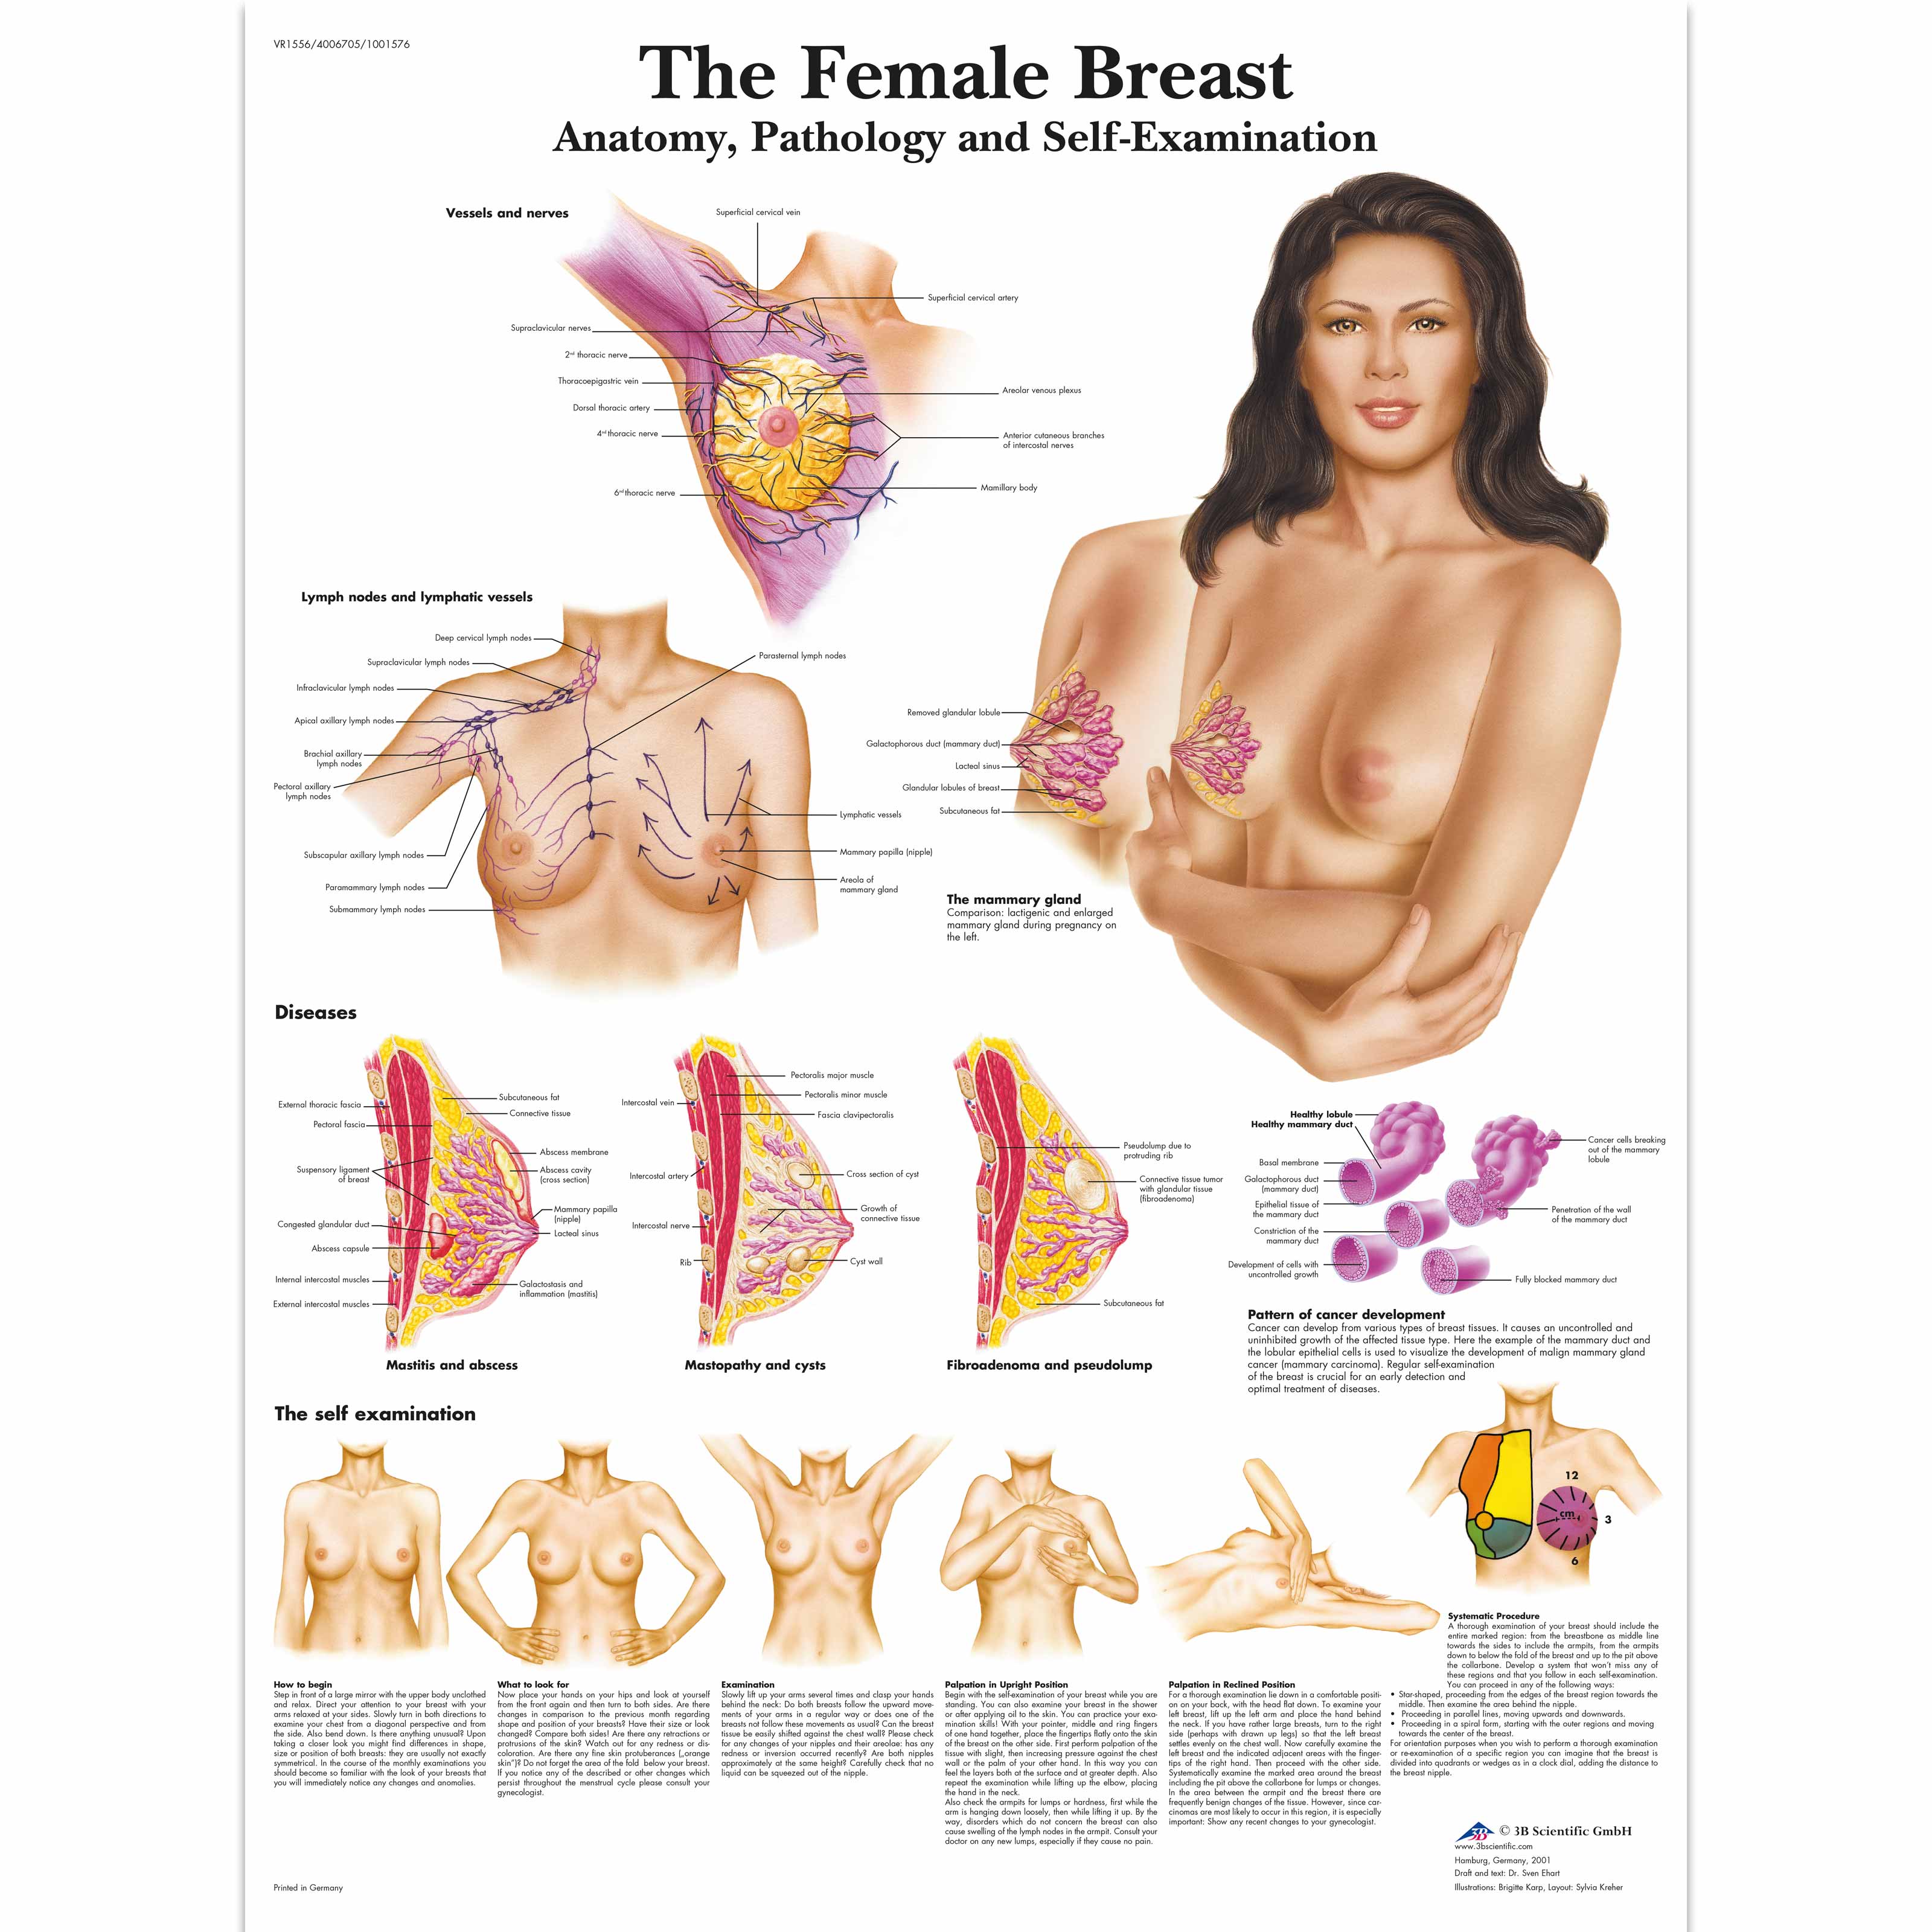 https://www.3bscientific.com/thumblibrary/VR1556L/VR1556L_01_3200_3200_Female-Breast-Chart-Anatomy-Pathology-and-Self-Examination.jpg